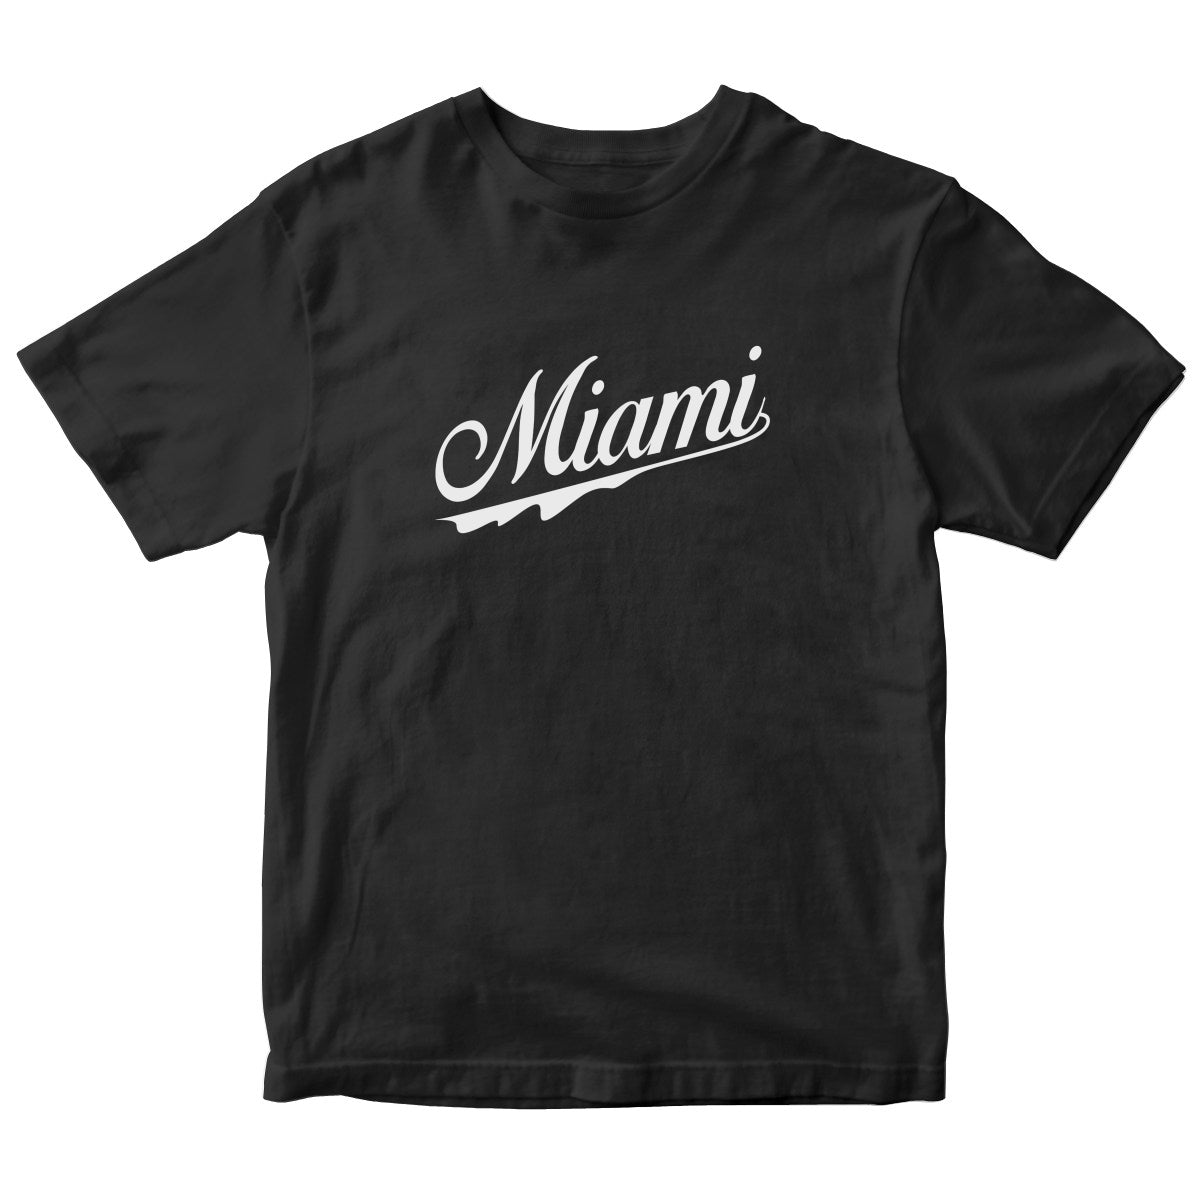 Miami Kids T-shirt